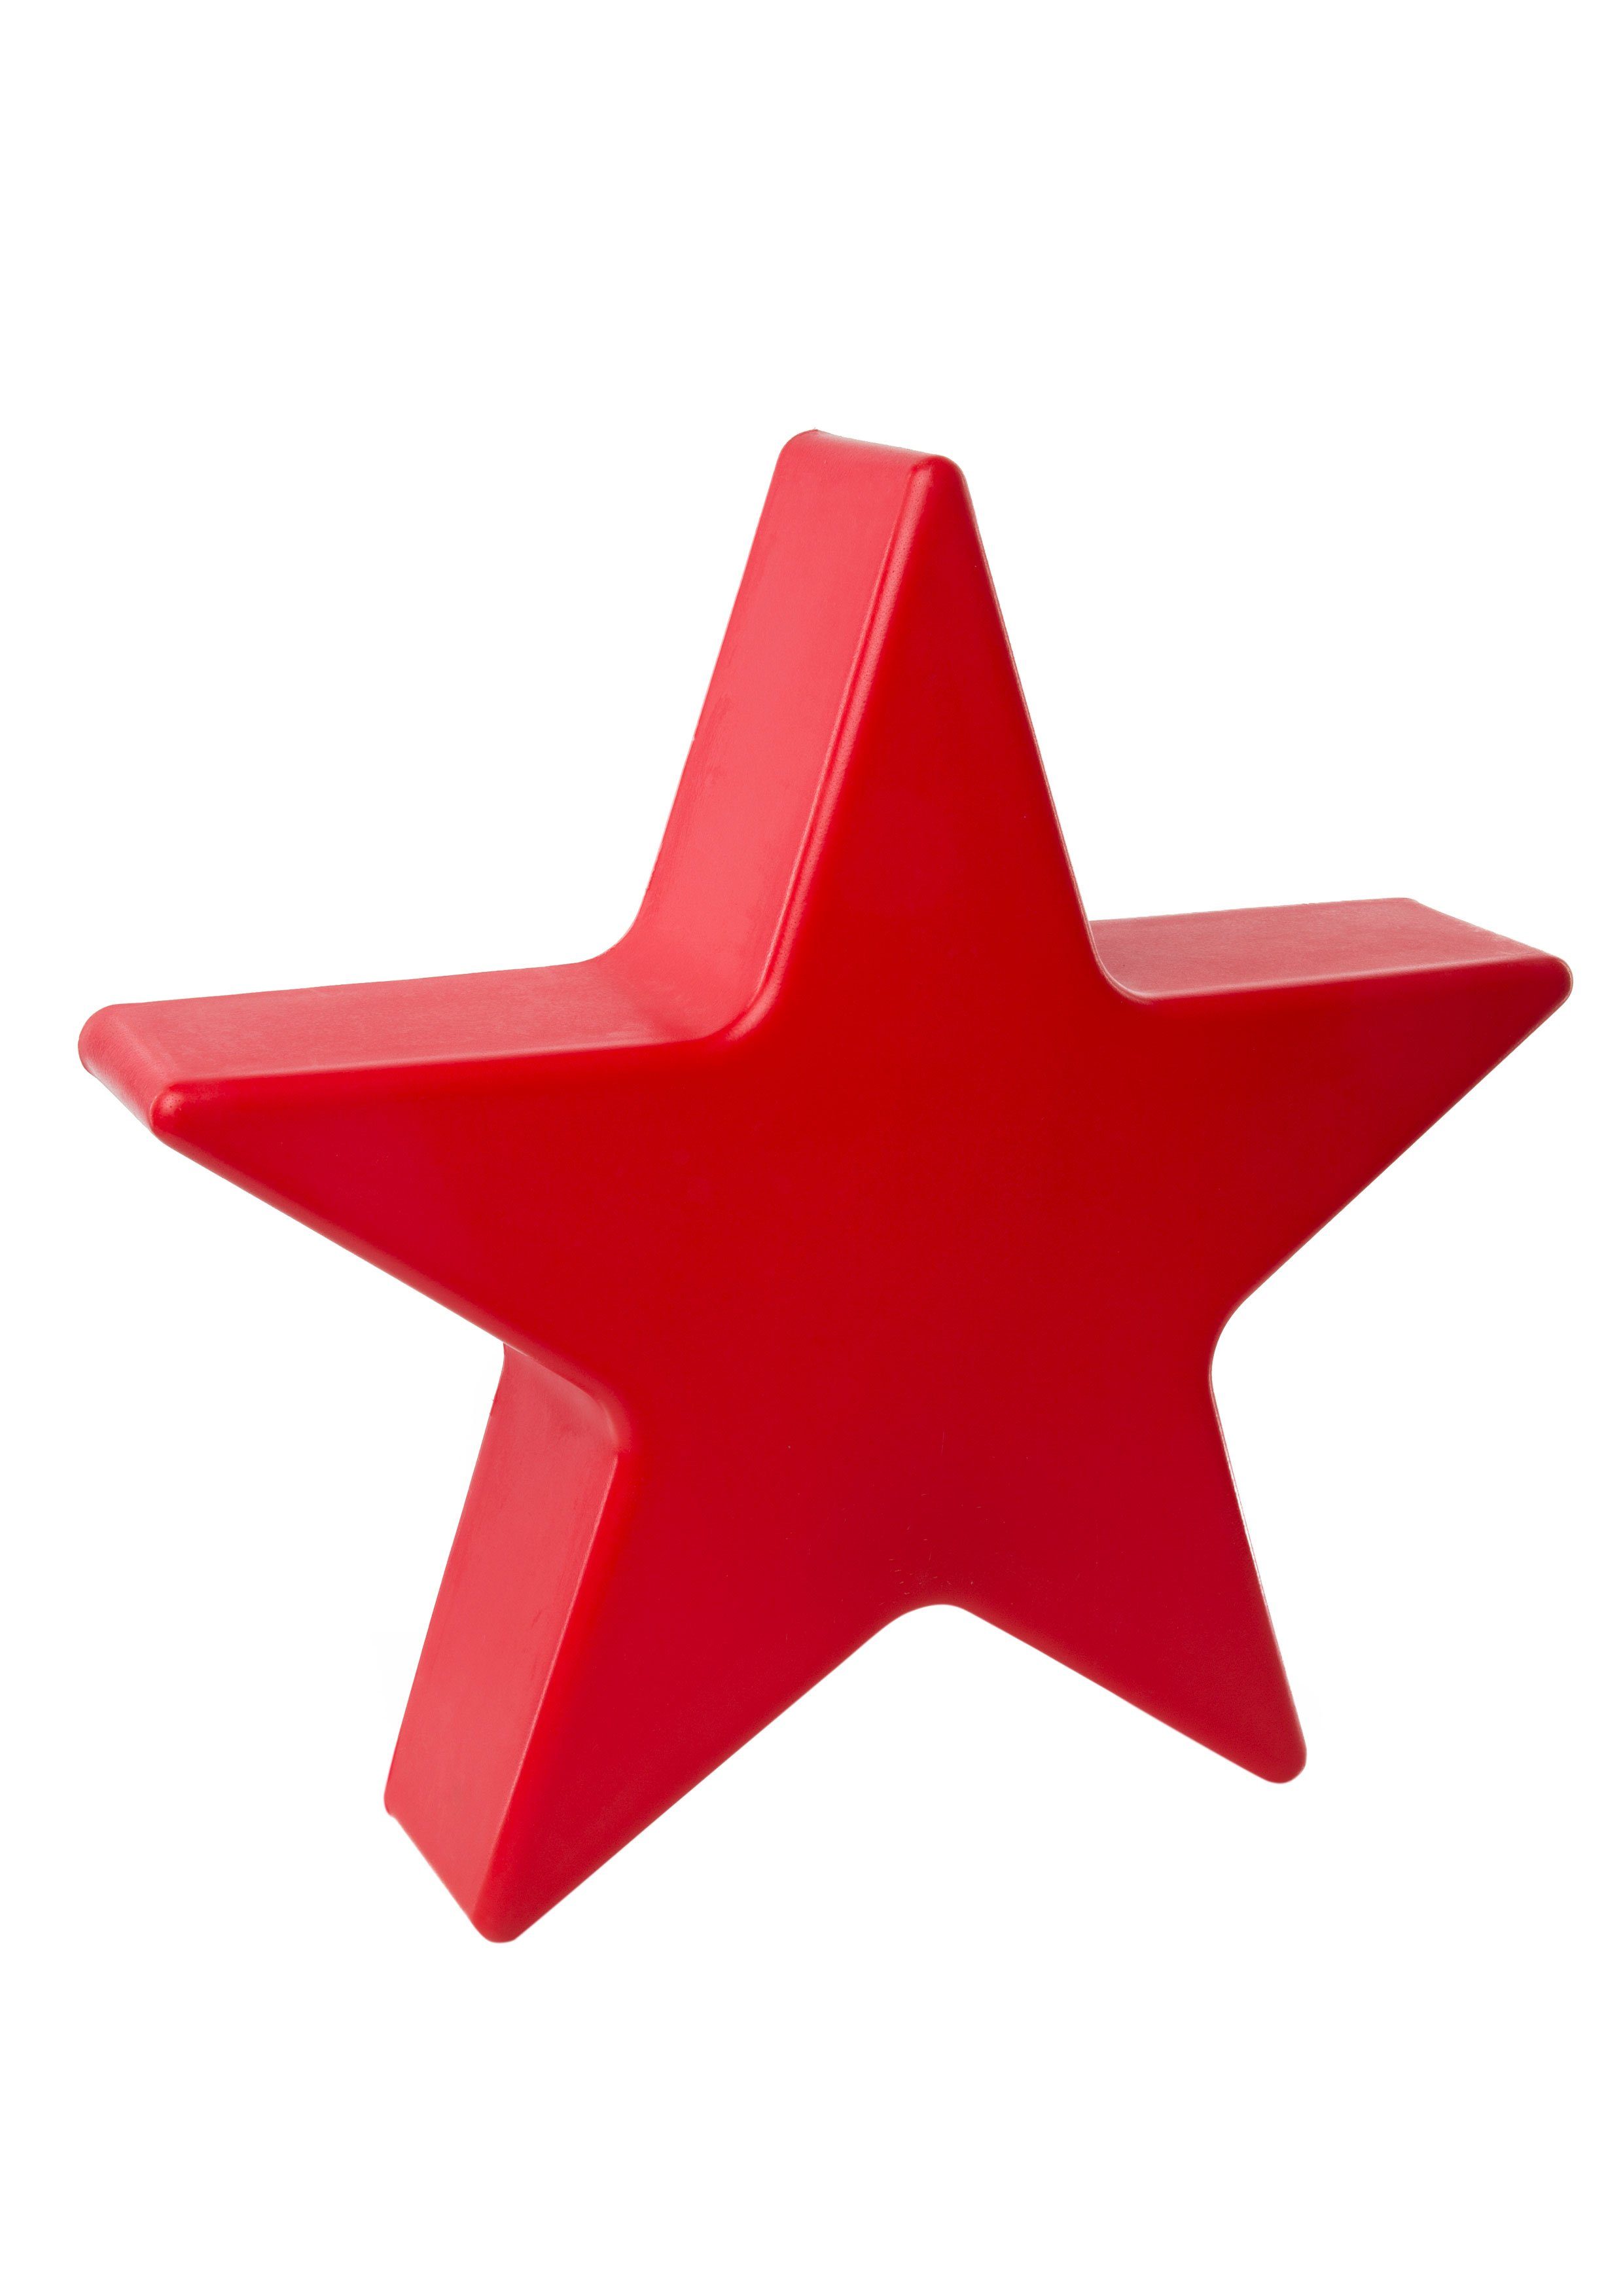 8 seasons design LED Stern Shining Star, LED WW, LED wechselbar, 40 cm rot für In- und Outdoor Red